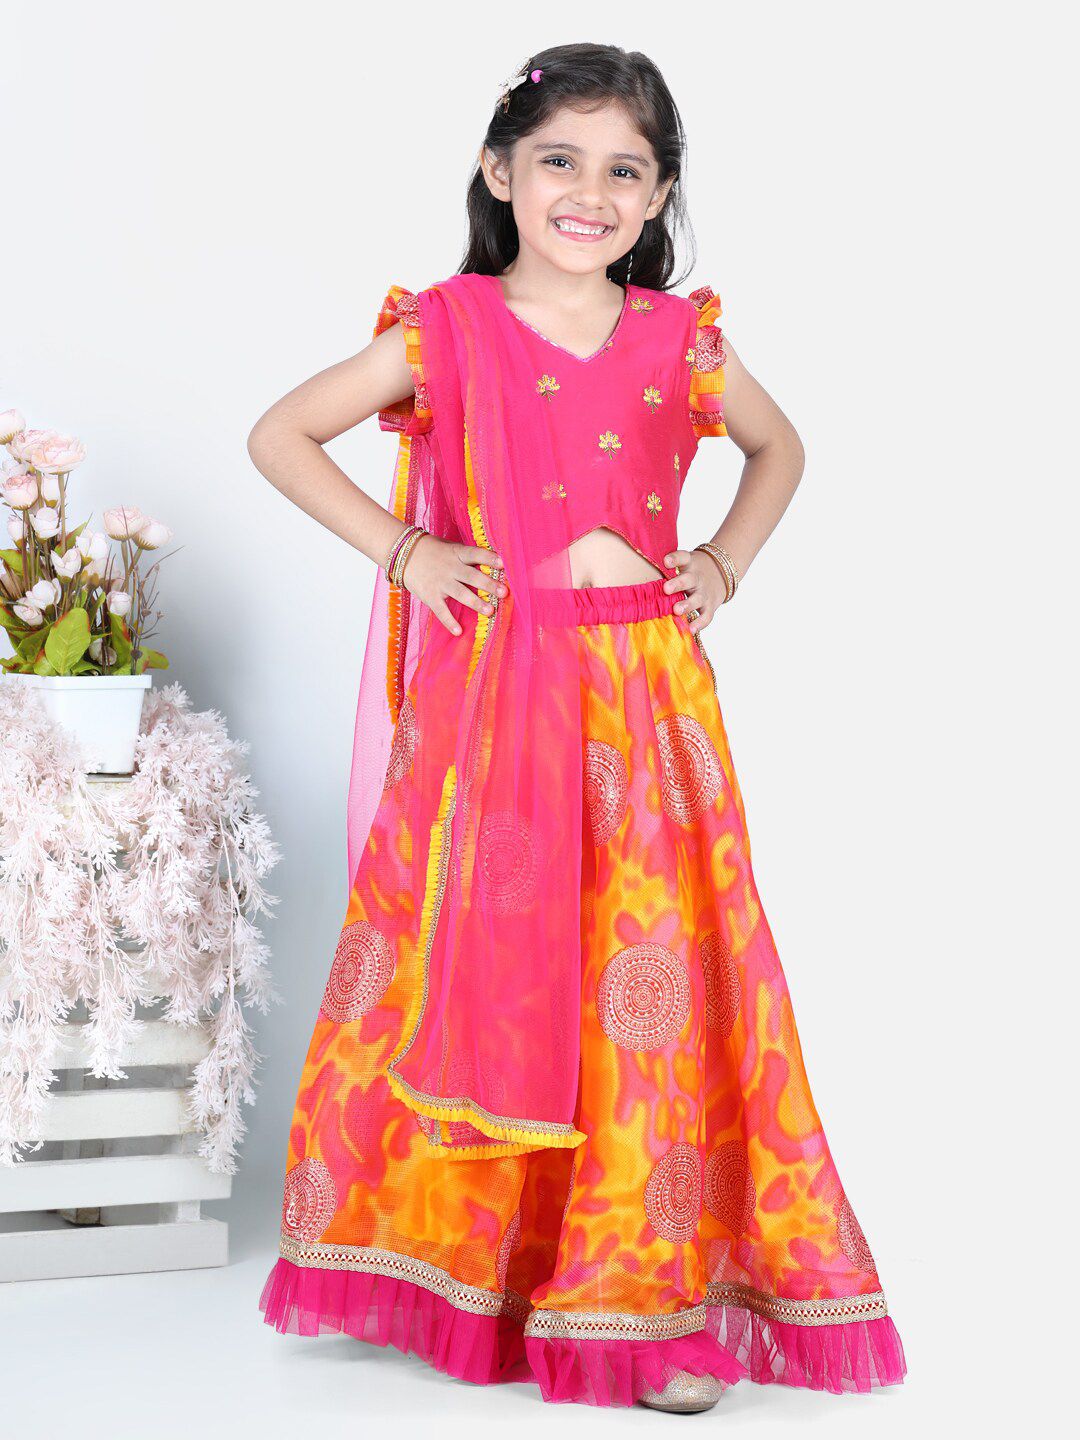 Kinder Kids Girls Embroidered Net Frilled Kota Lehenga & Blouse With Dupatta Price in India